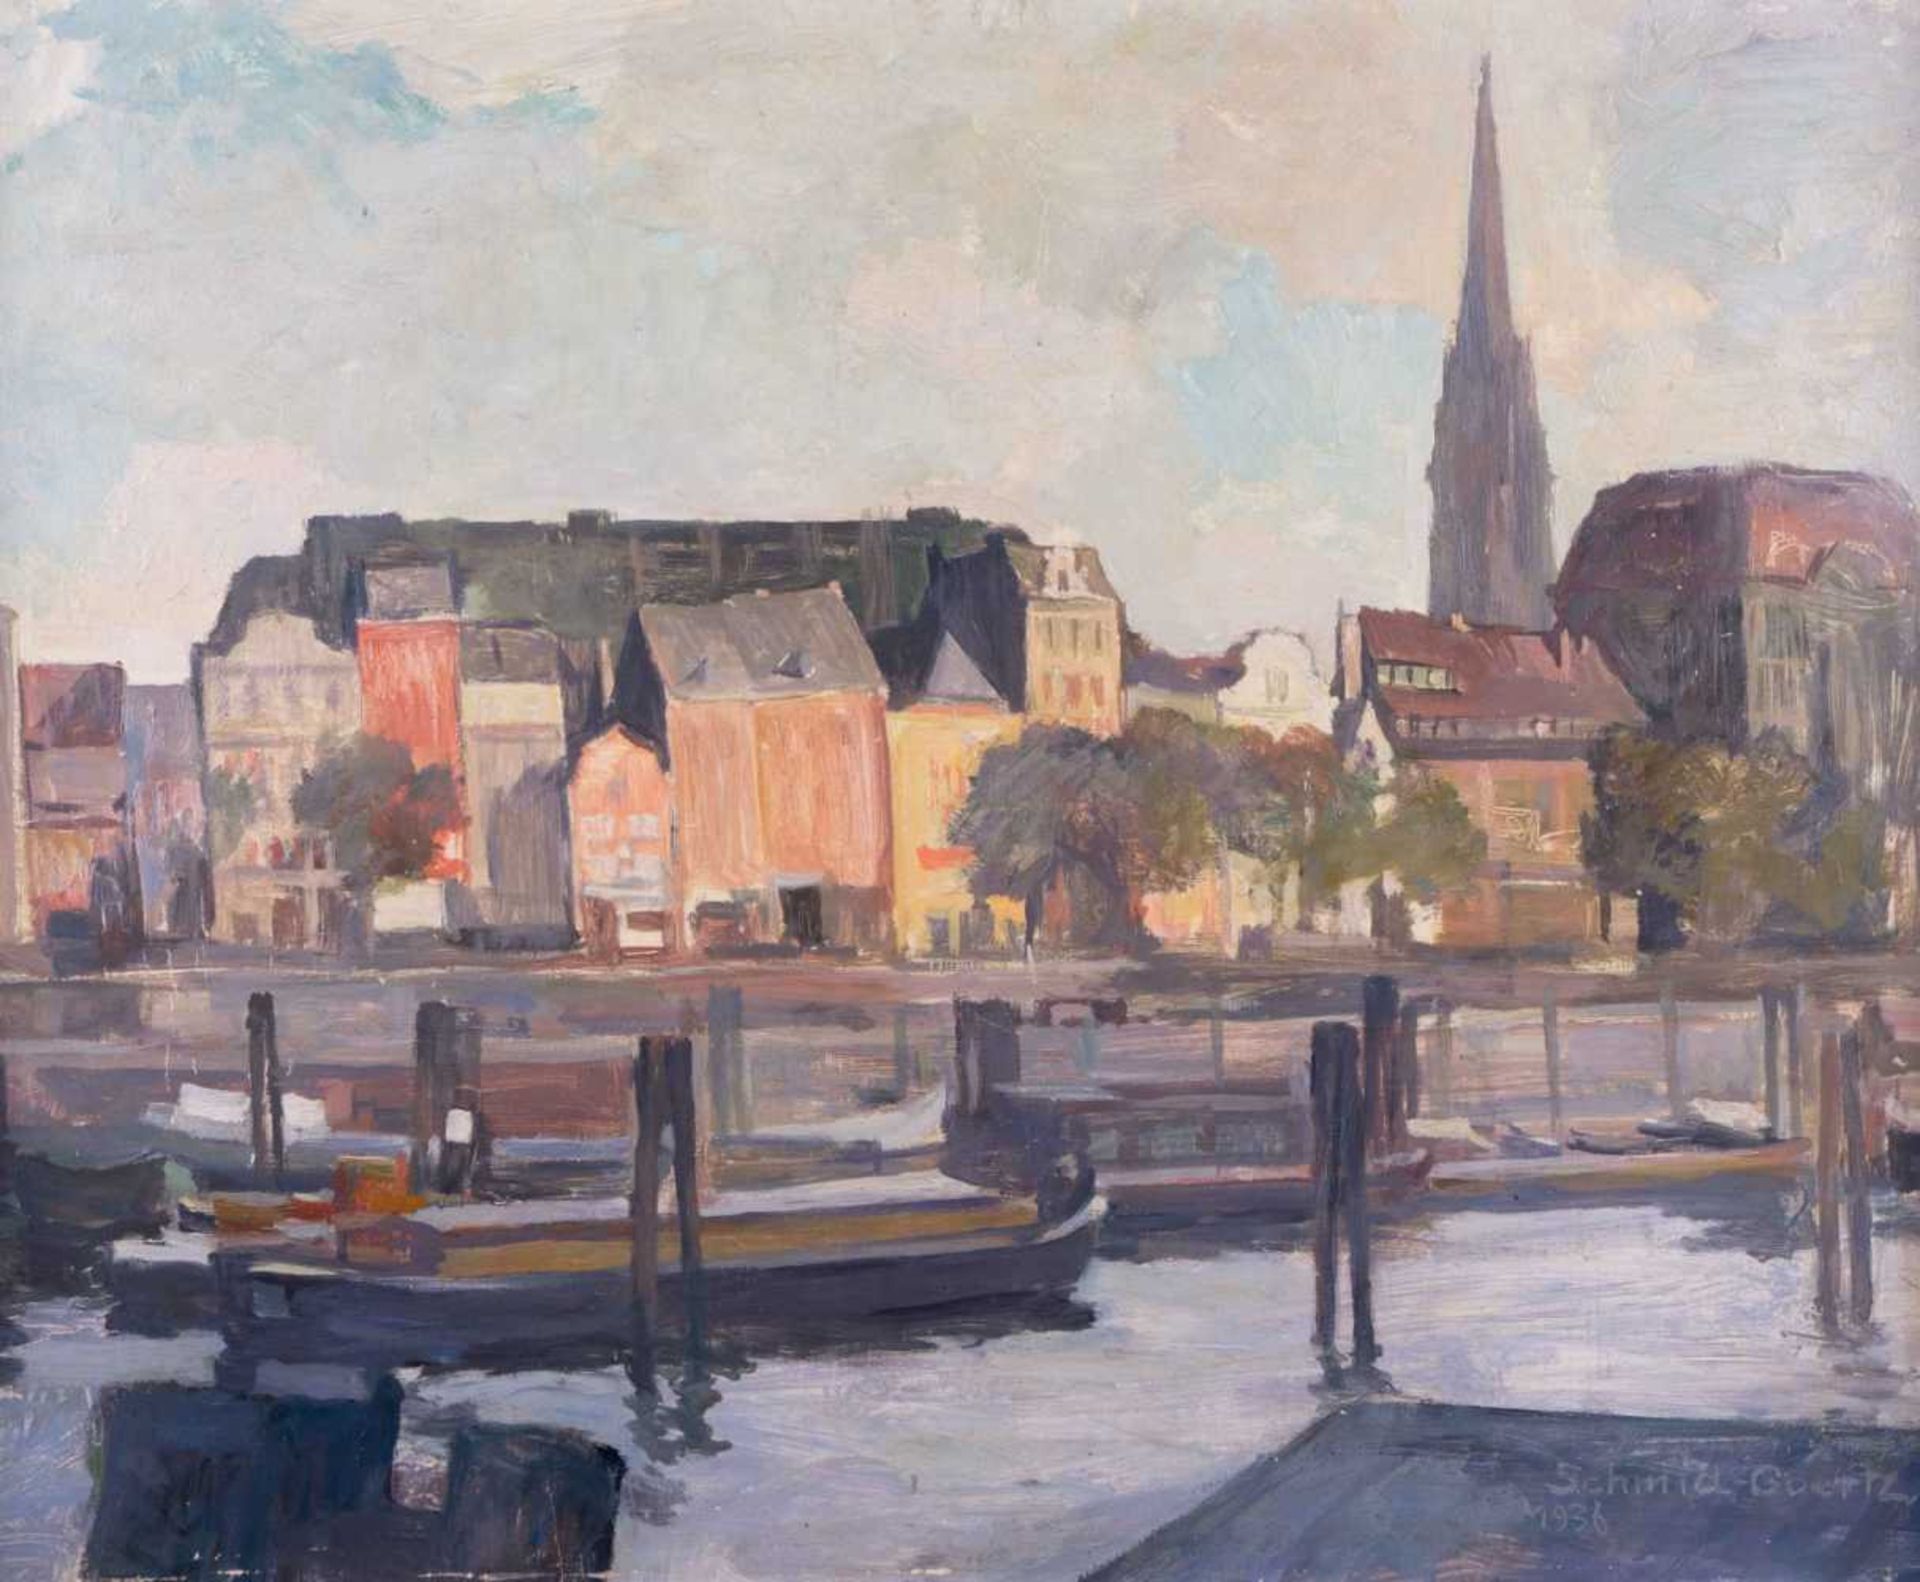 Gustav SCHMID-GOERTZ (1889-?) "am Hamburger Hafen" Gemälde Öl/Karton, 51 cm x 61 cm, rechts unten